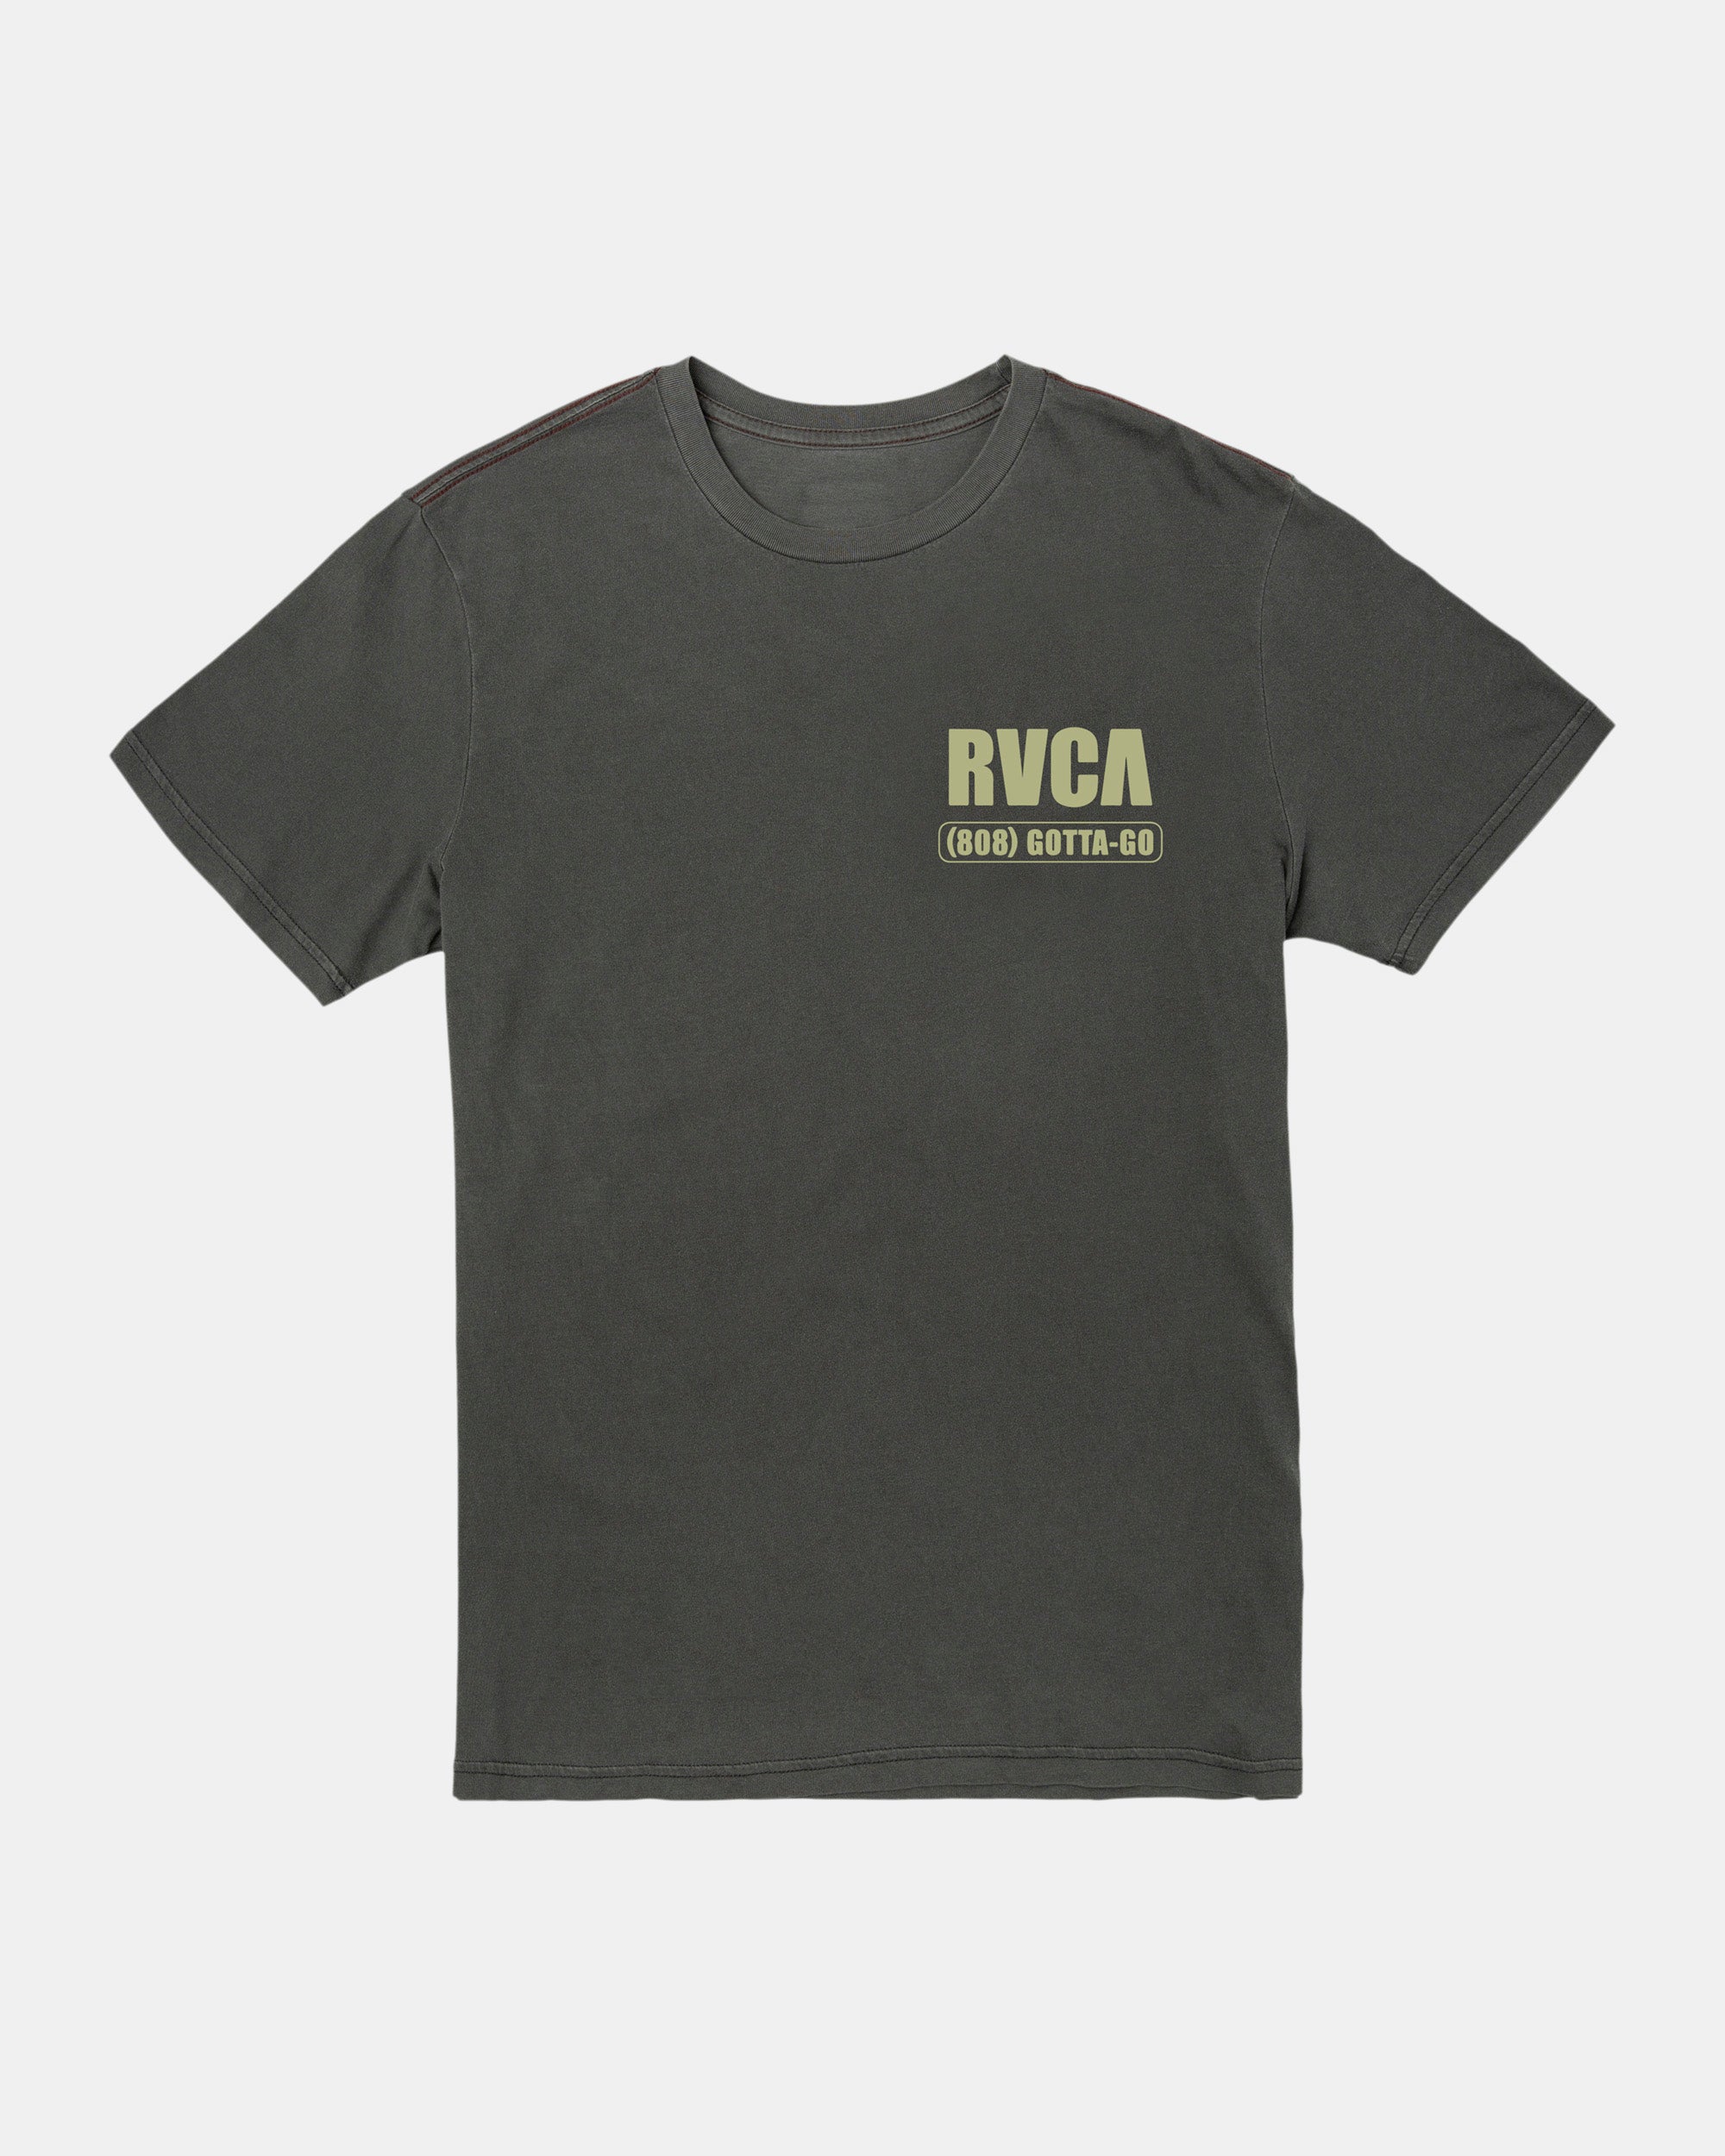 RVCA Bail Bonds T-Shirt - Pirate Black